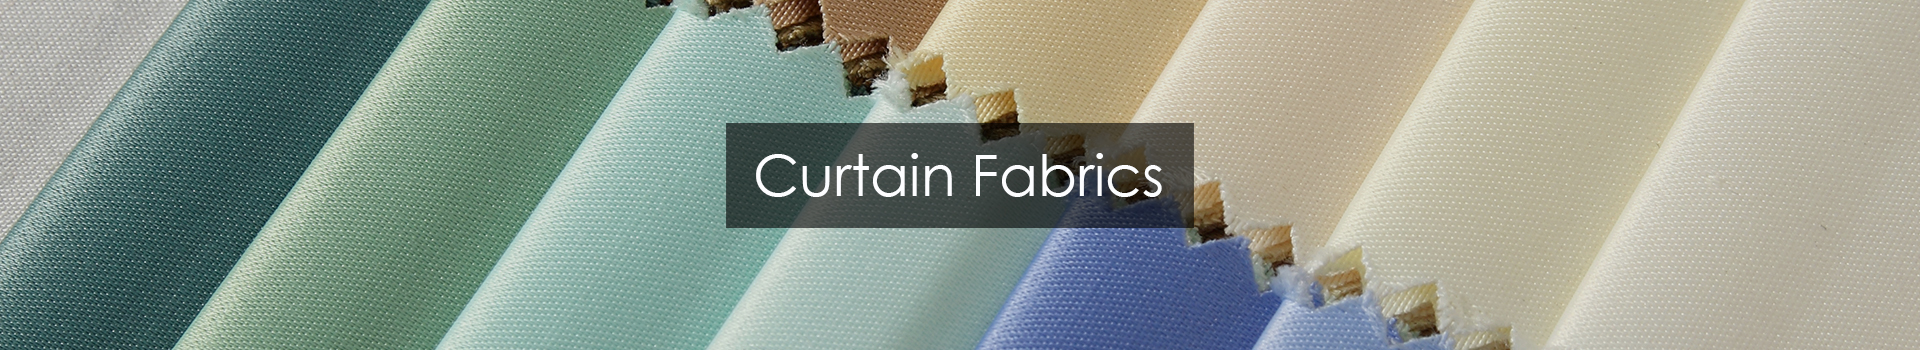 Curtain Fabrics in Dubai & Abu Dhabi